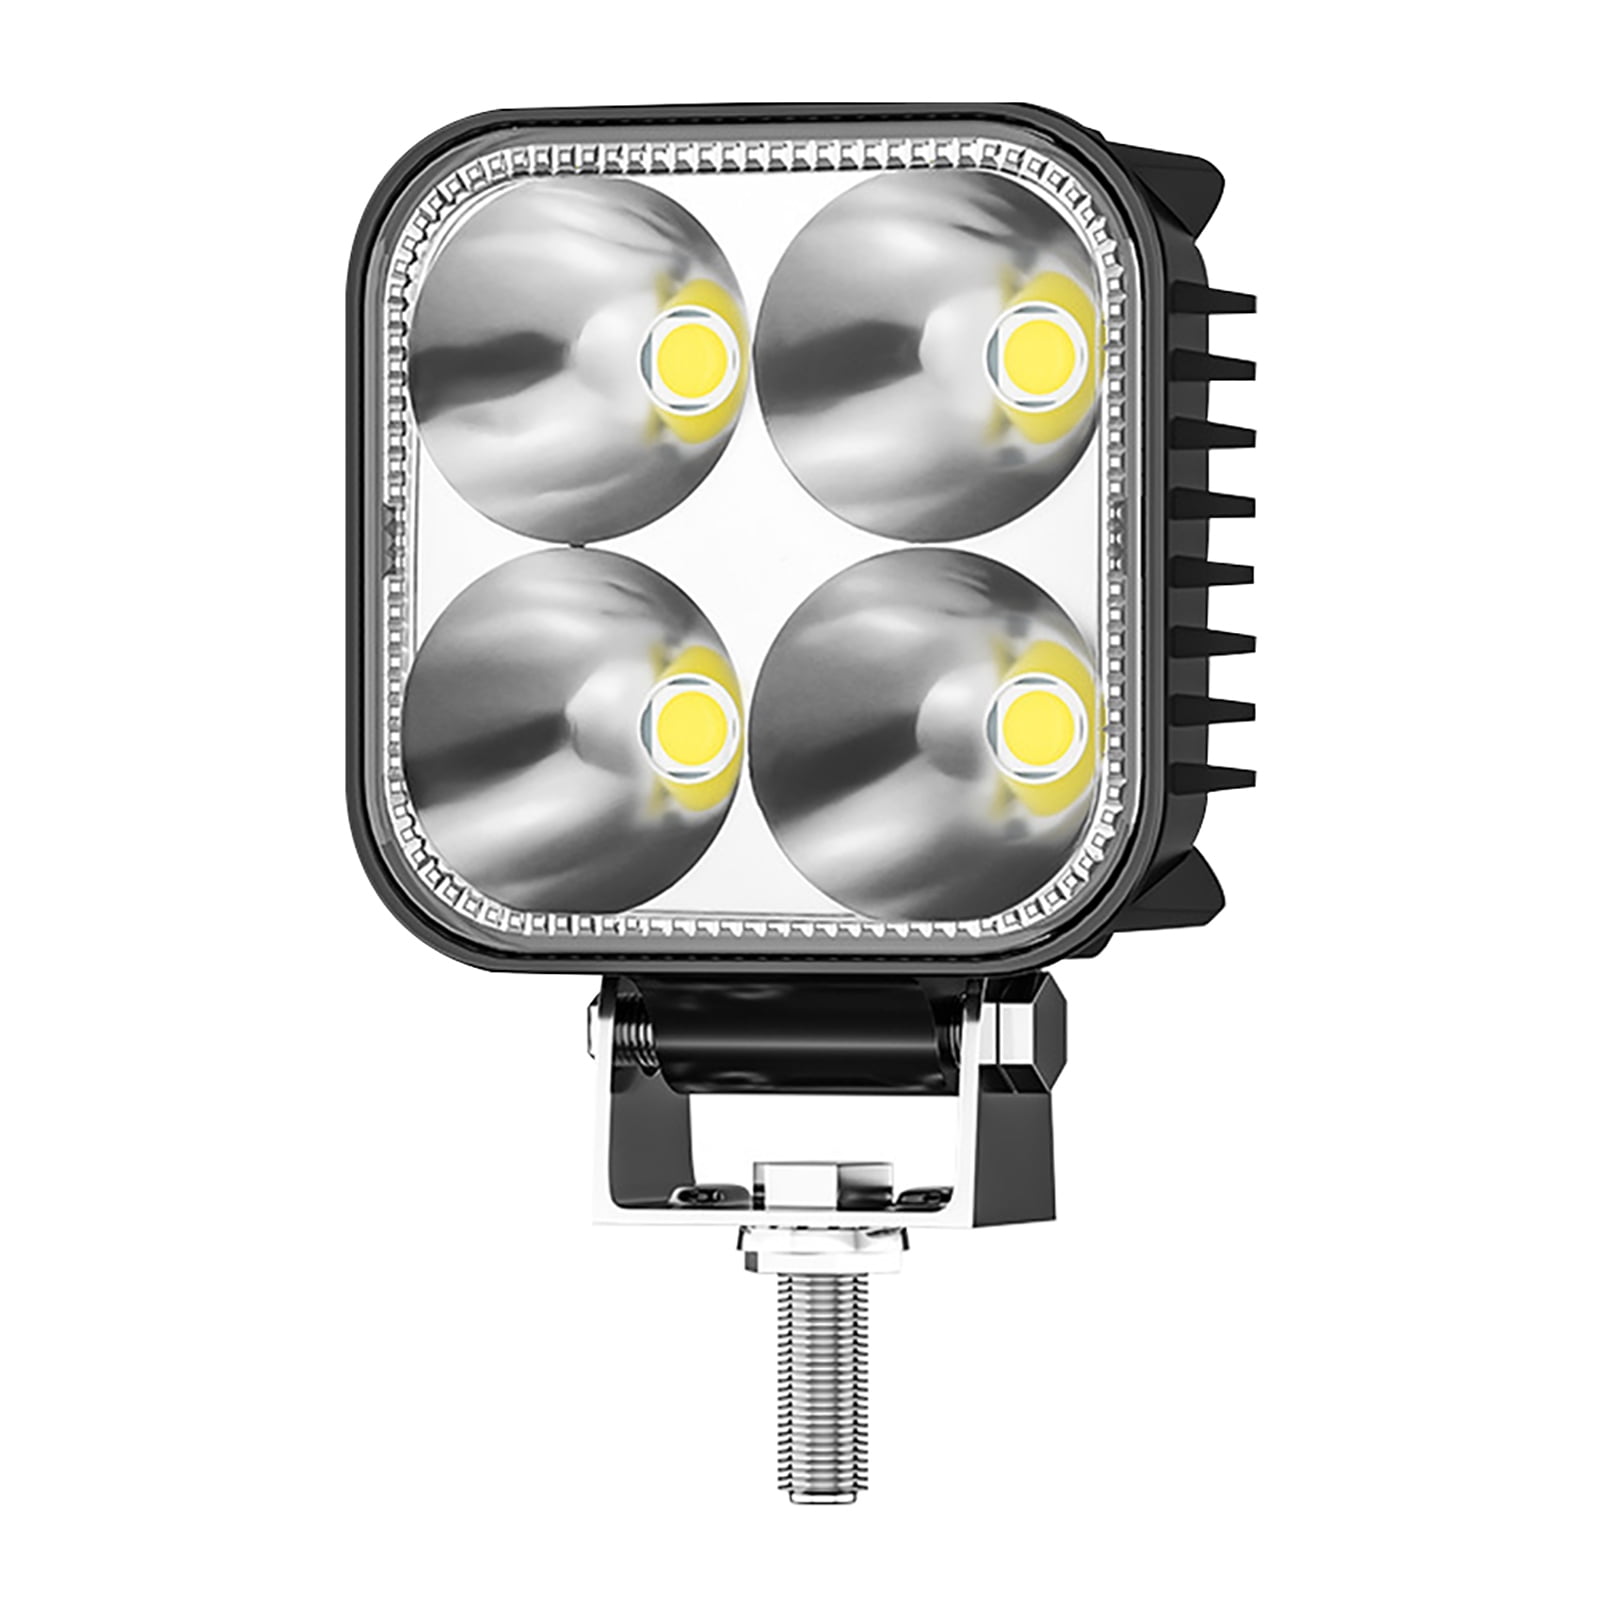 Details about   280 Lumen Rechargeable LED Task Light Dual Mode Portable Garage Workshop Lamp 